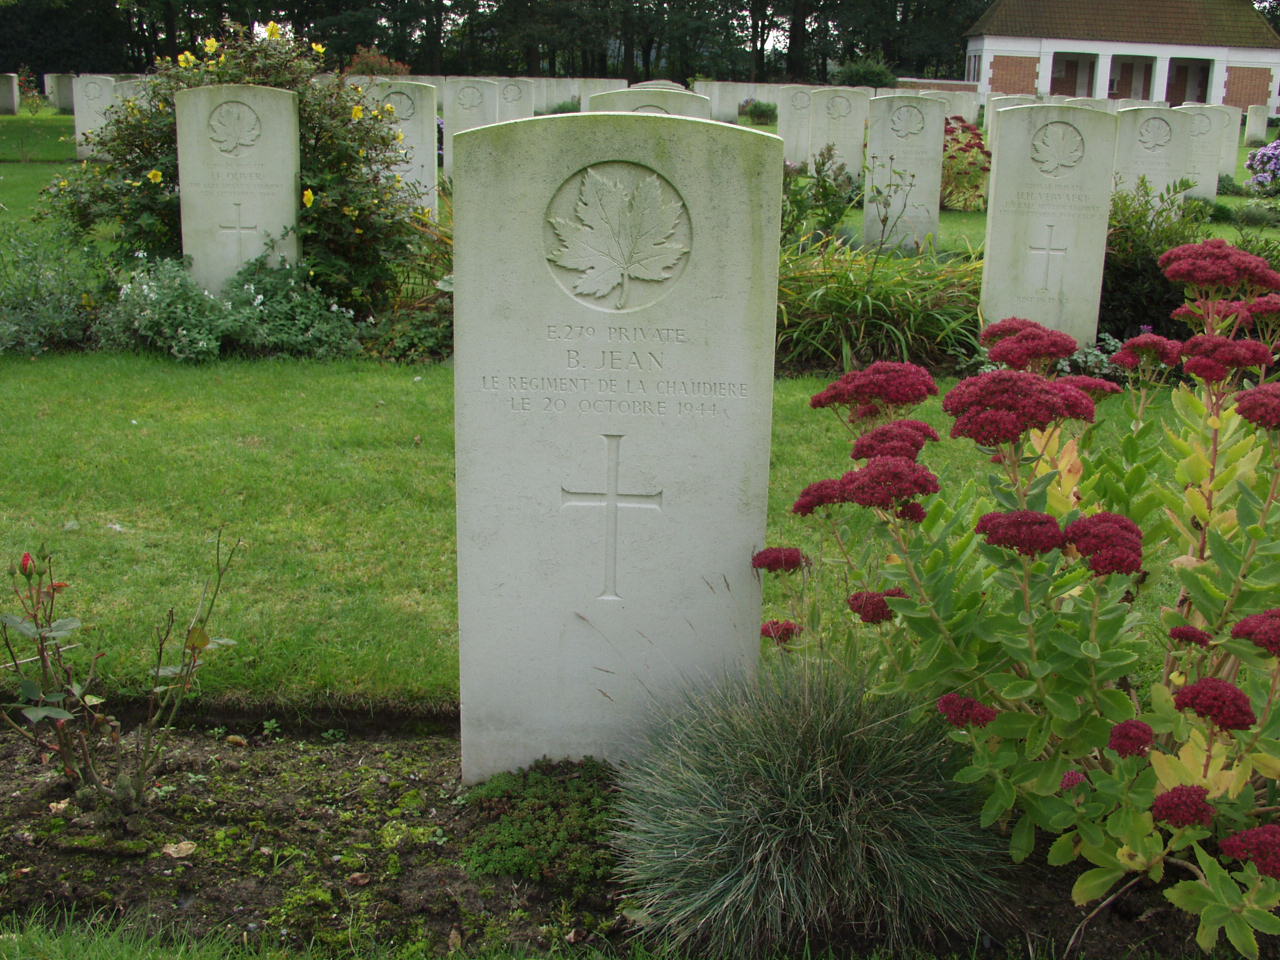 The Adegem Canadian War Cemetery B Jean